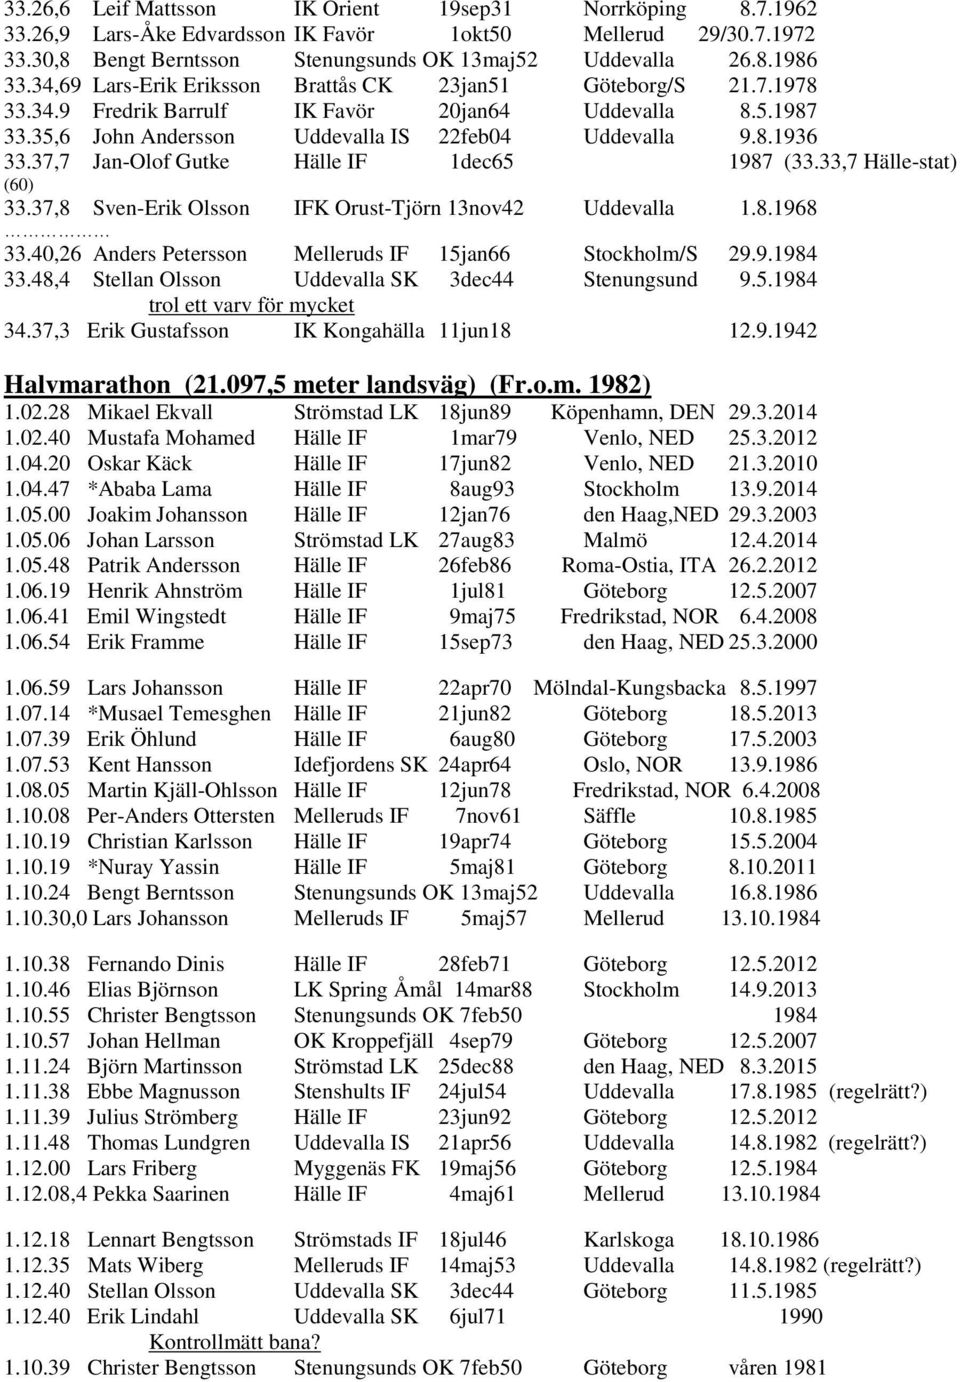 37,7 Jan-Olof Gutke Hälle IF 1dec65 1987 (33.33,7 Hälle-stat) (60) 33.37,8 Sven-Erik Olsson IFK Orust-Tjörn 13nov42 Uddevalla 1.8.1968 33.40,26 Anders Petersson Melleruds IF 15jan66 Stockholm/S 29.9.1984 33.